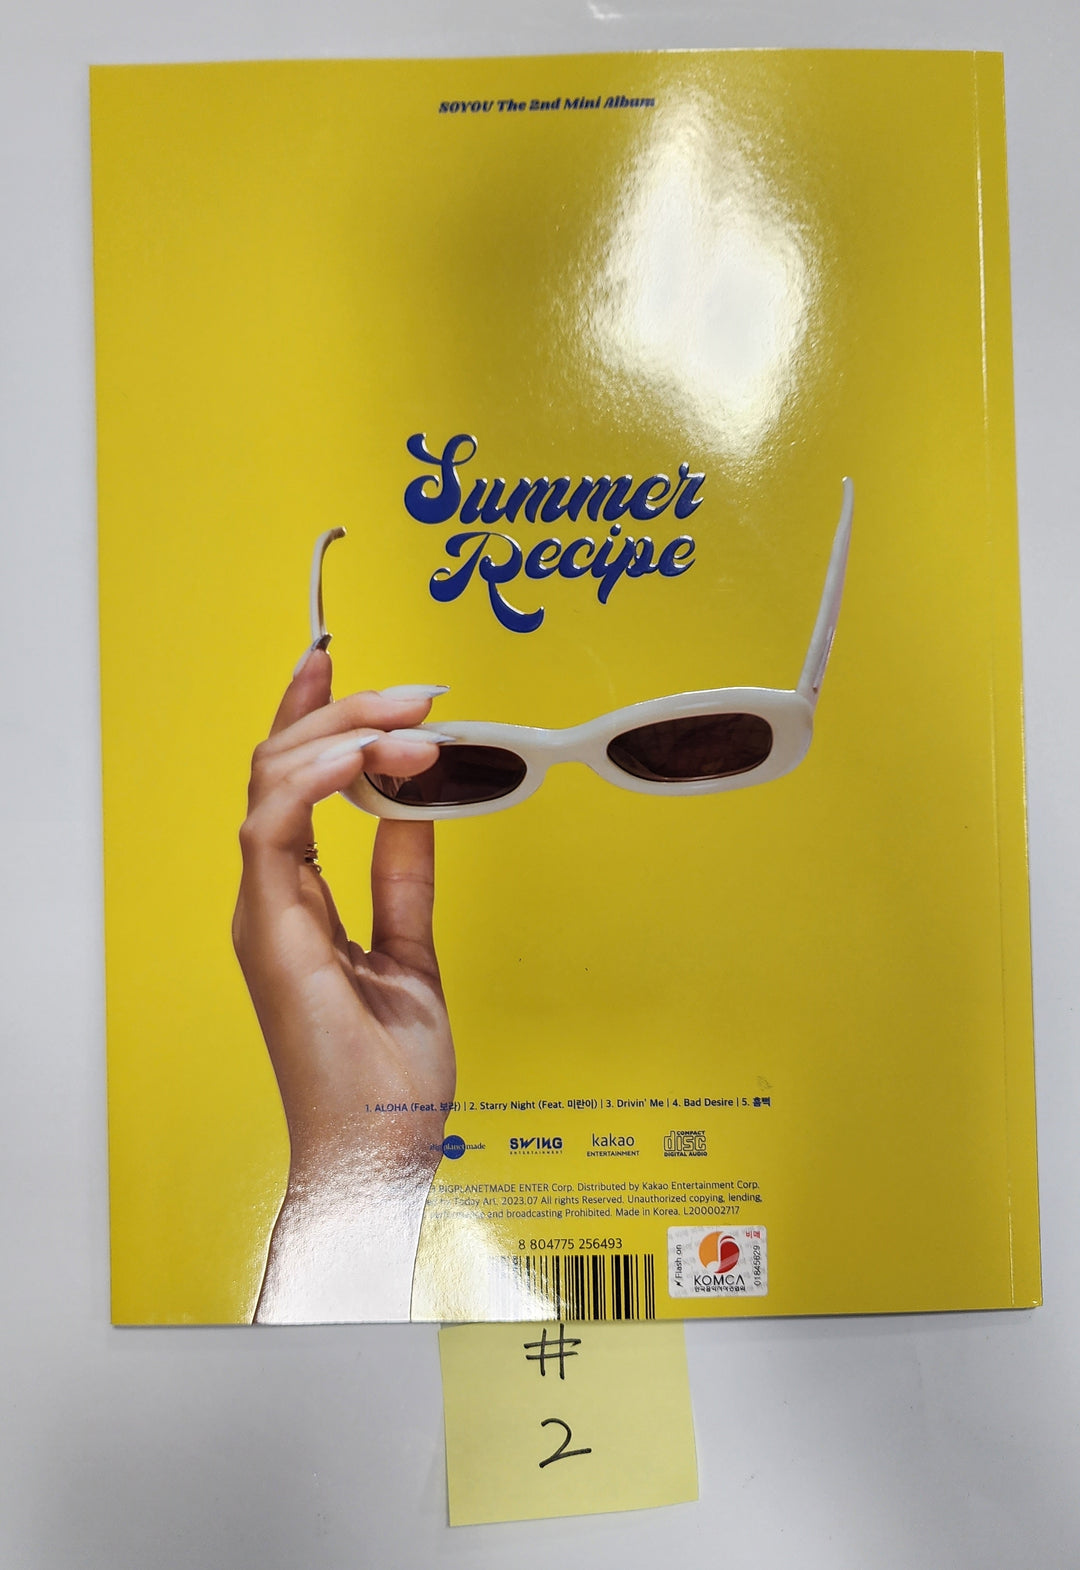 Soyou "Summer Recipe" - Hand Autographed(Signed) Promo Album